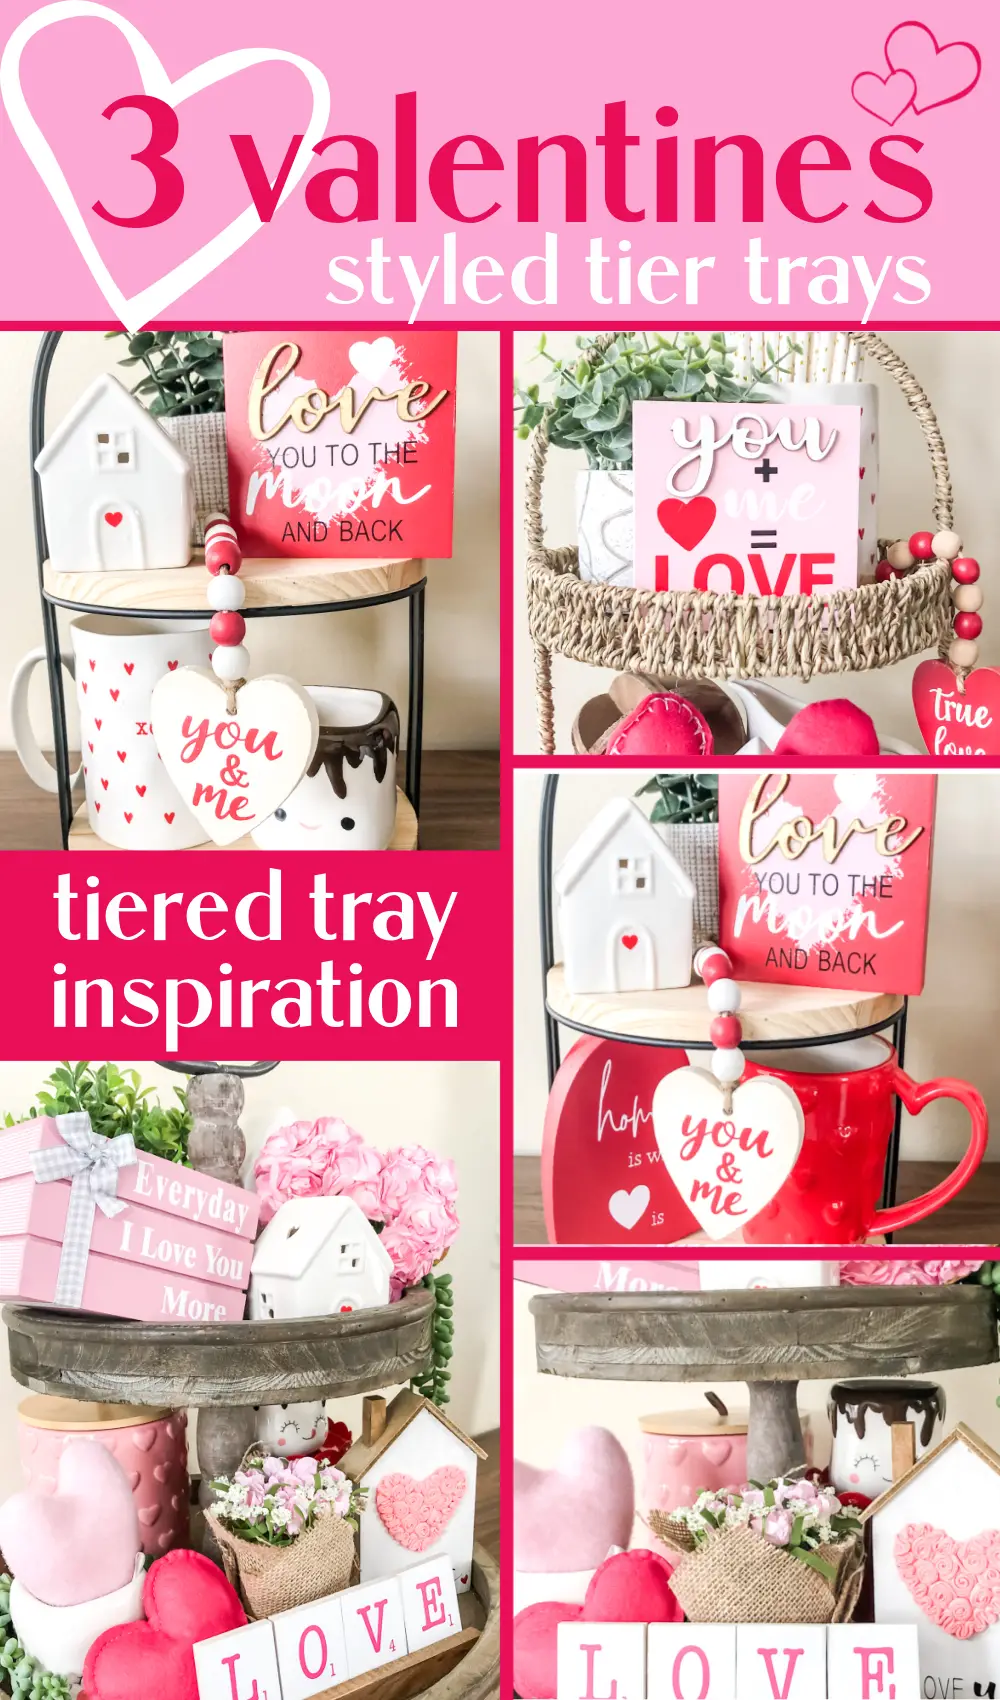 Three ways to style Valentine's day tiered trays